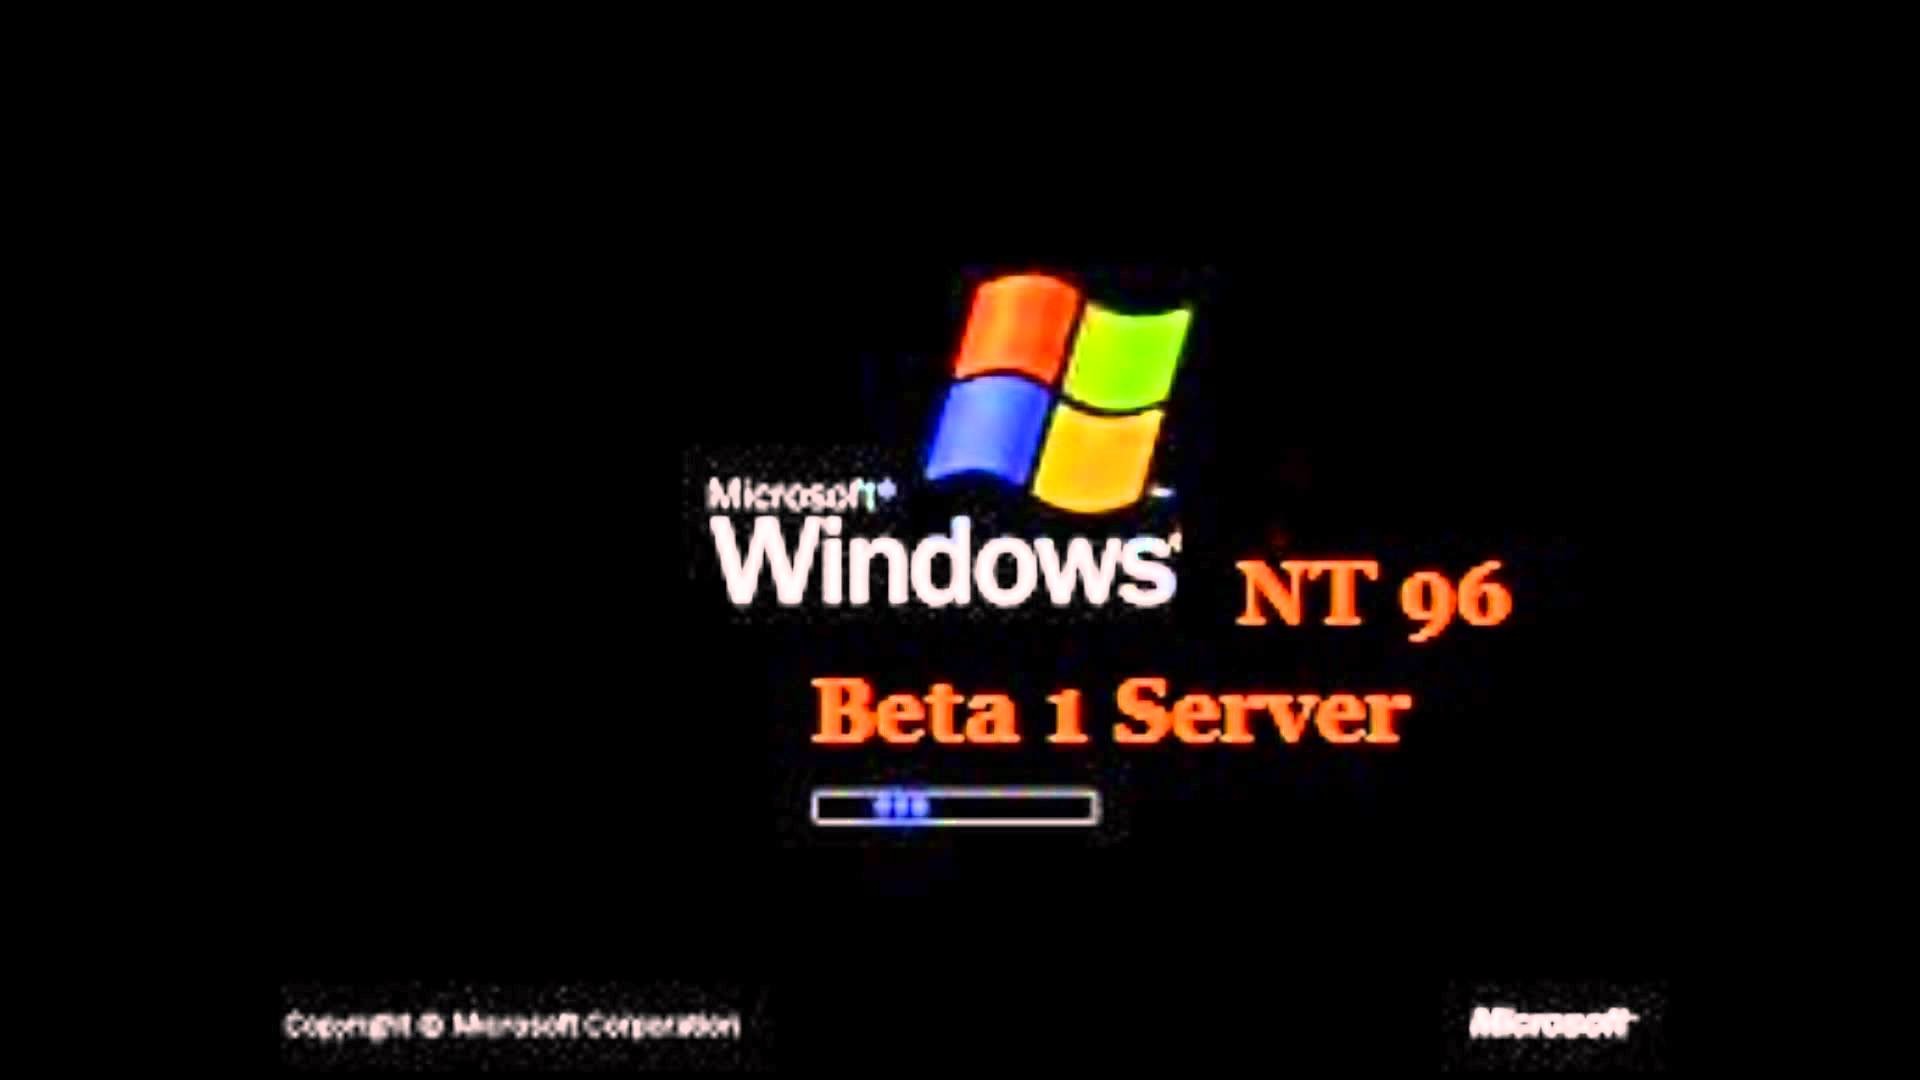 Windows Never Released 1: Special Episode: Windows NT 96 Betas